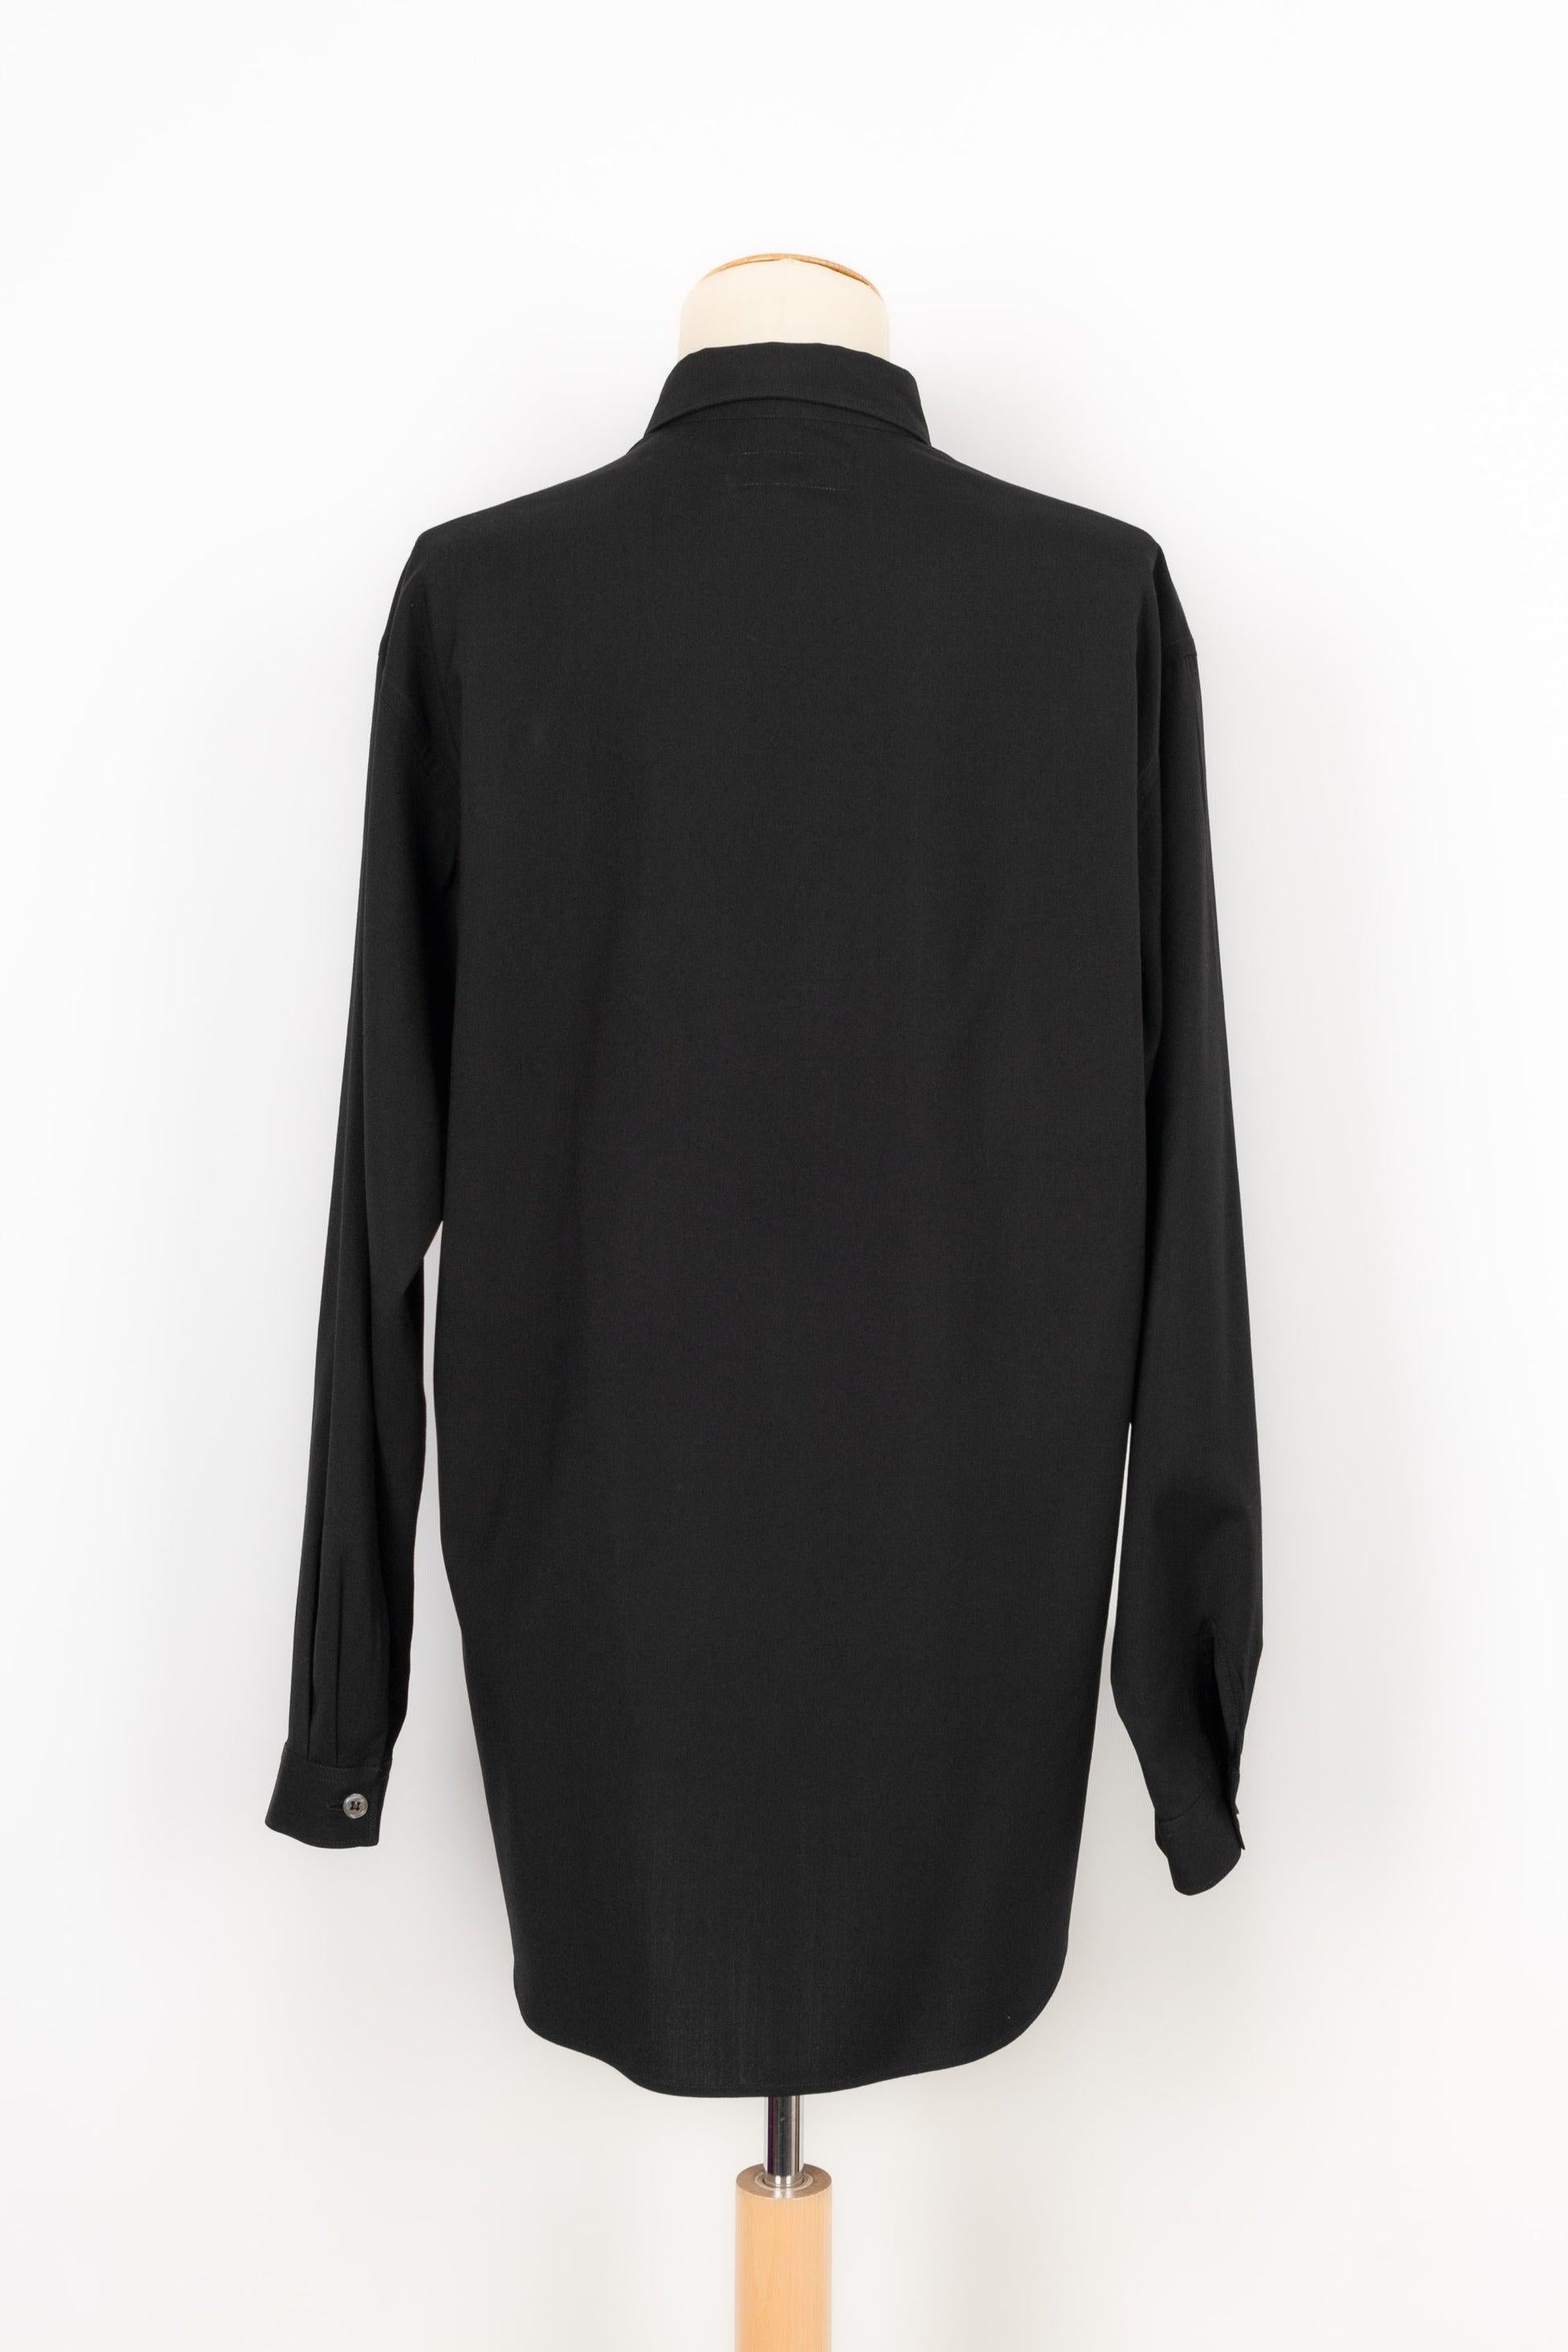 Yamamoto Black Woolen Shirt In Excellent Condition For Sale In SAINT-OUEN-SUR-SEINE, FR